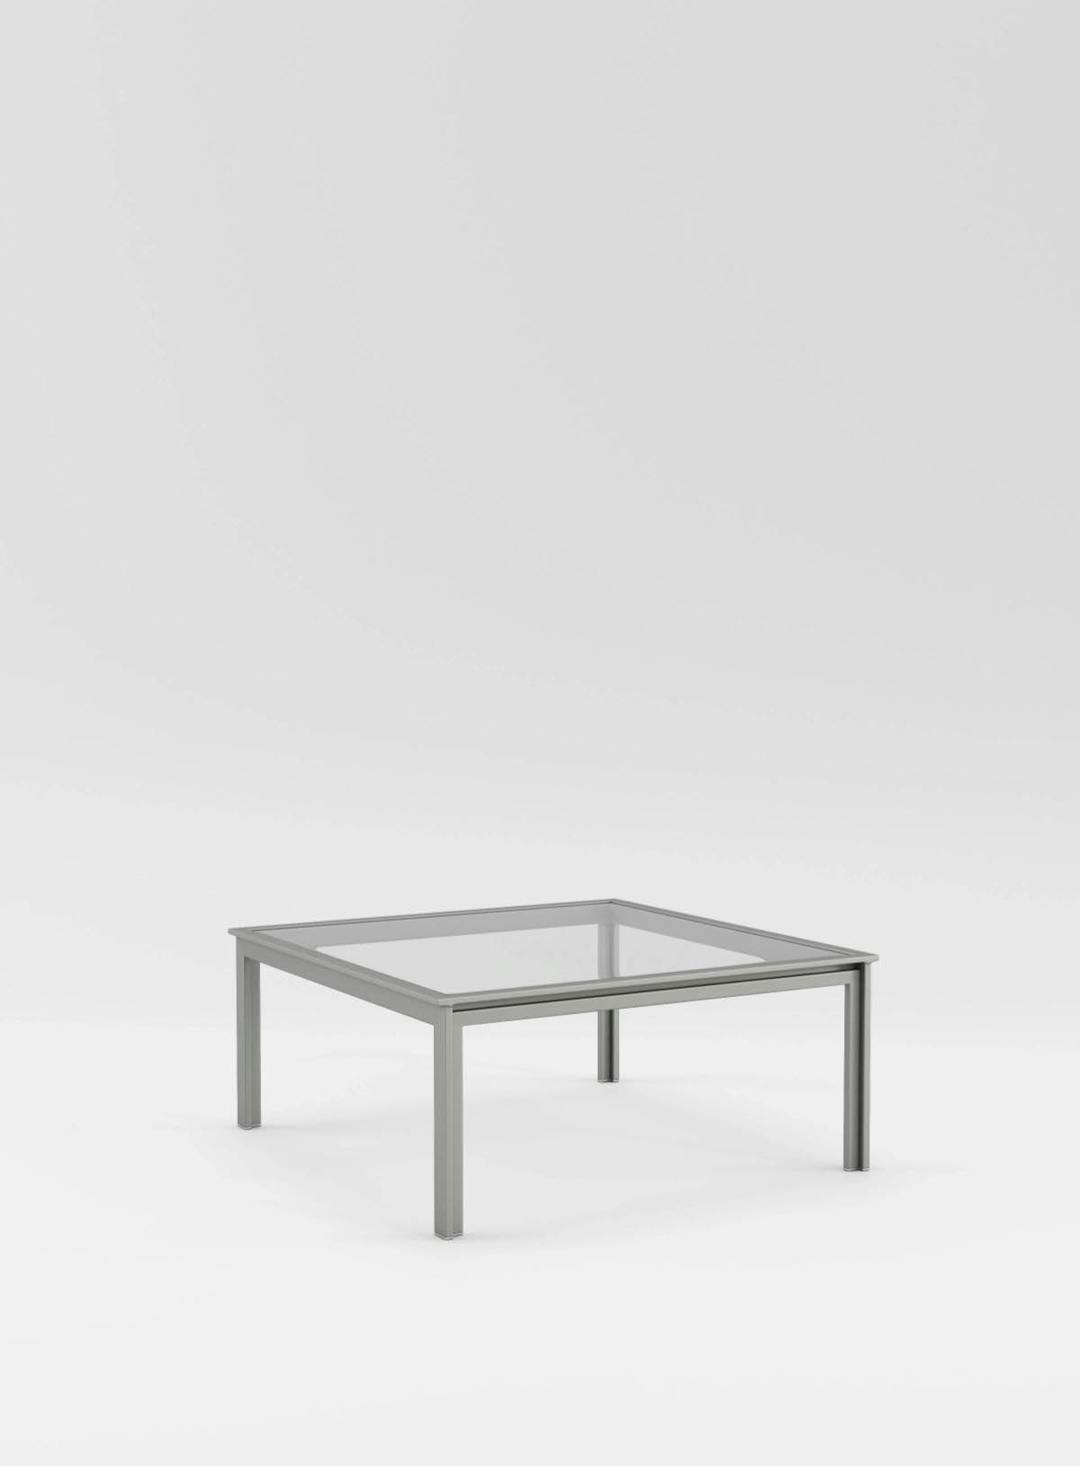 Swim 45" Square Chat Table, Solid Aluminum Top